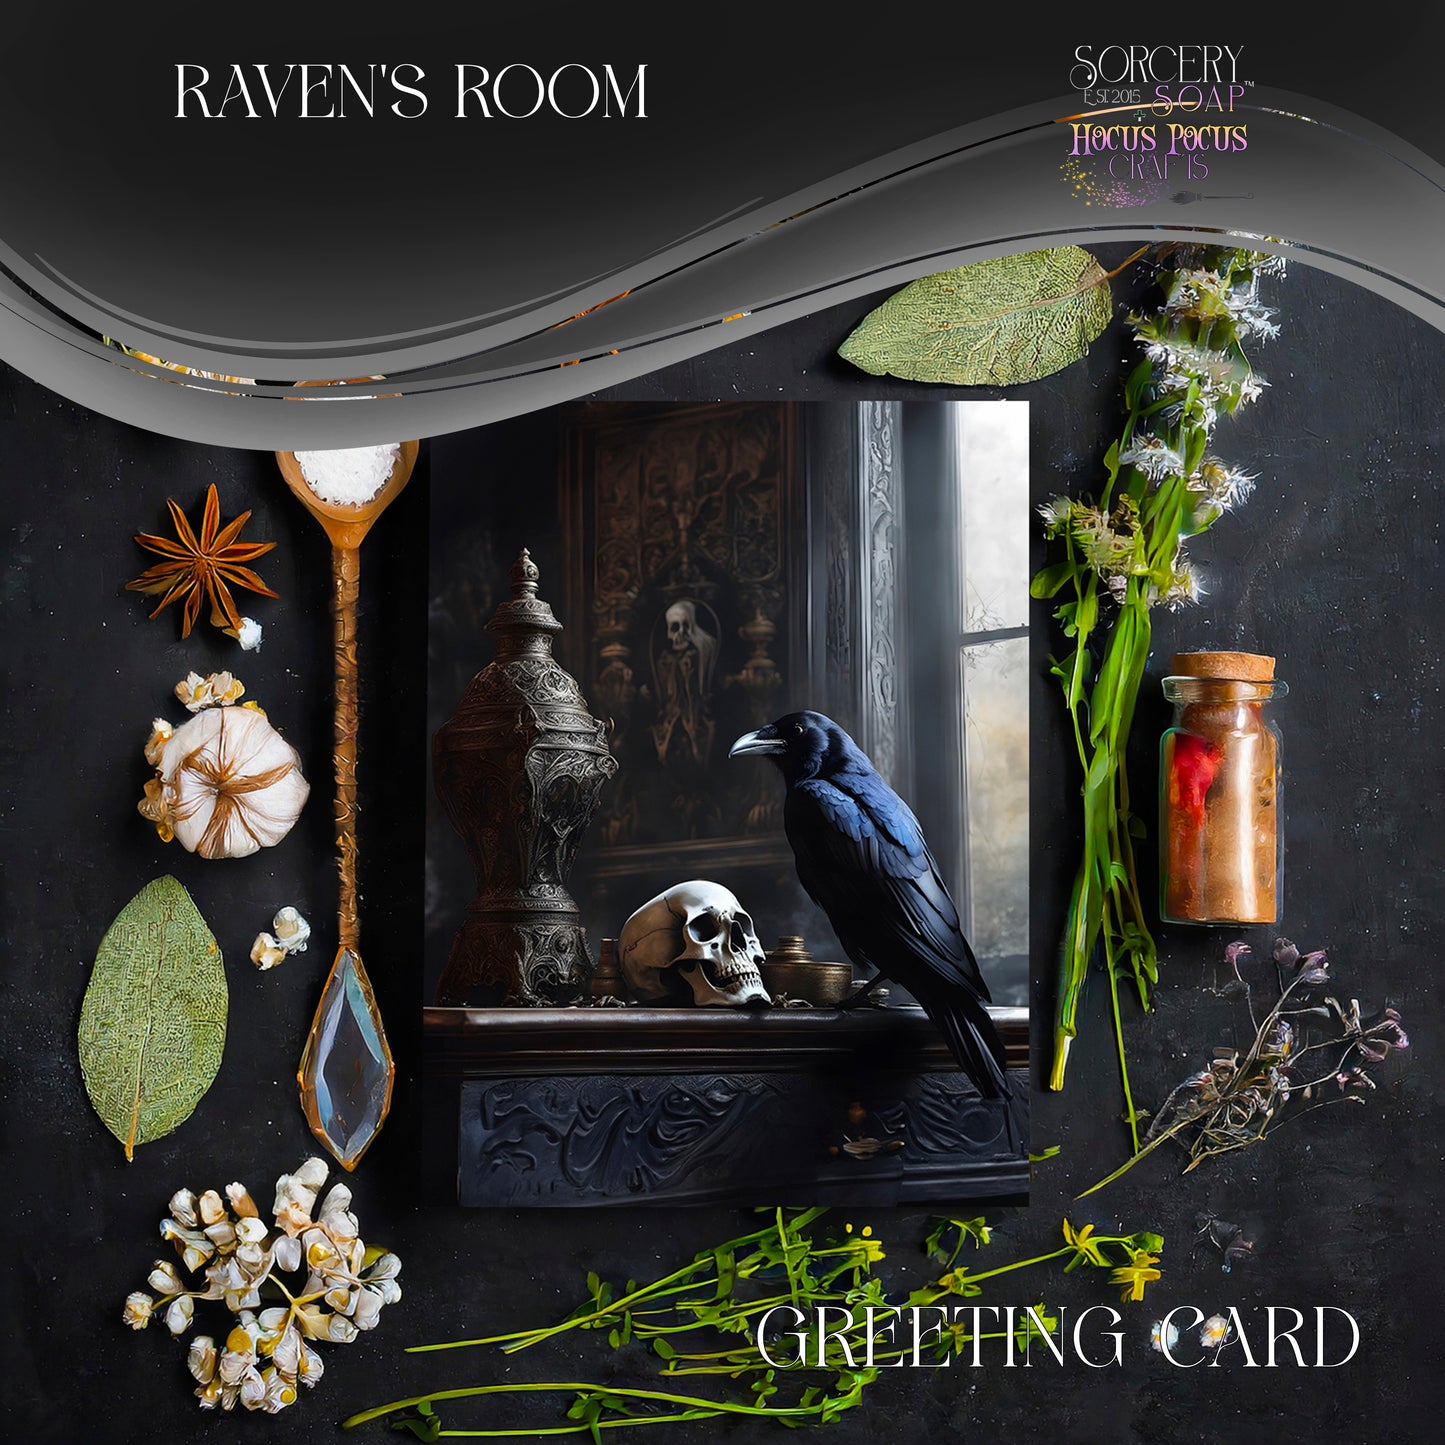 Ravens Room Greeting Card